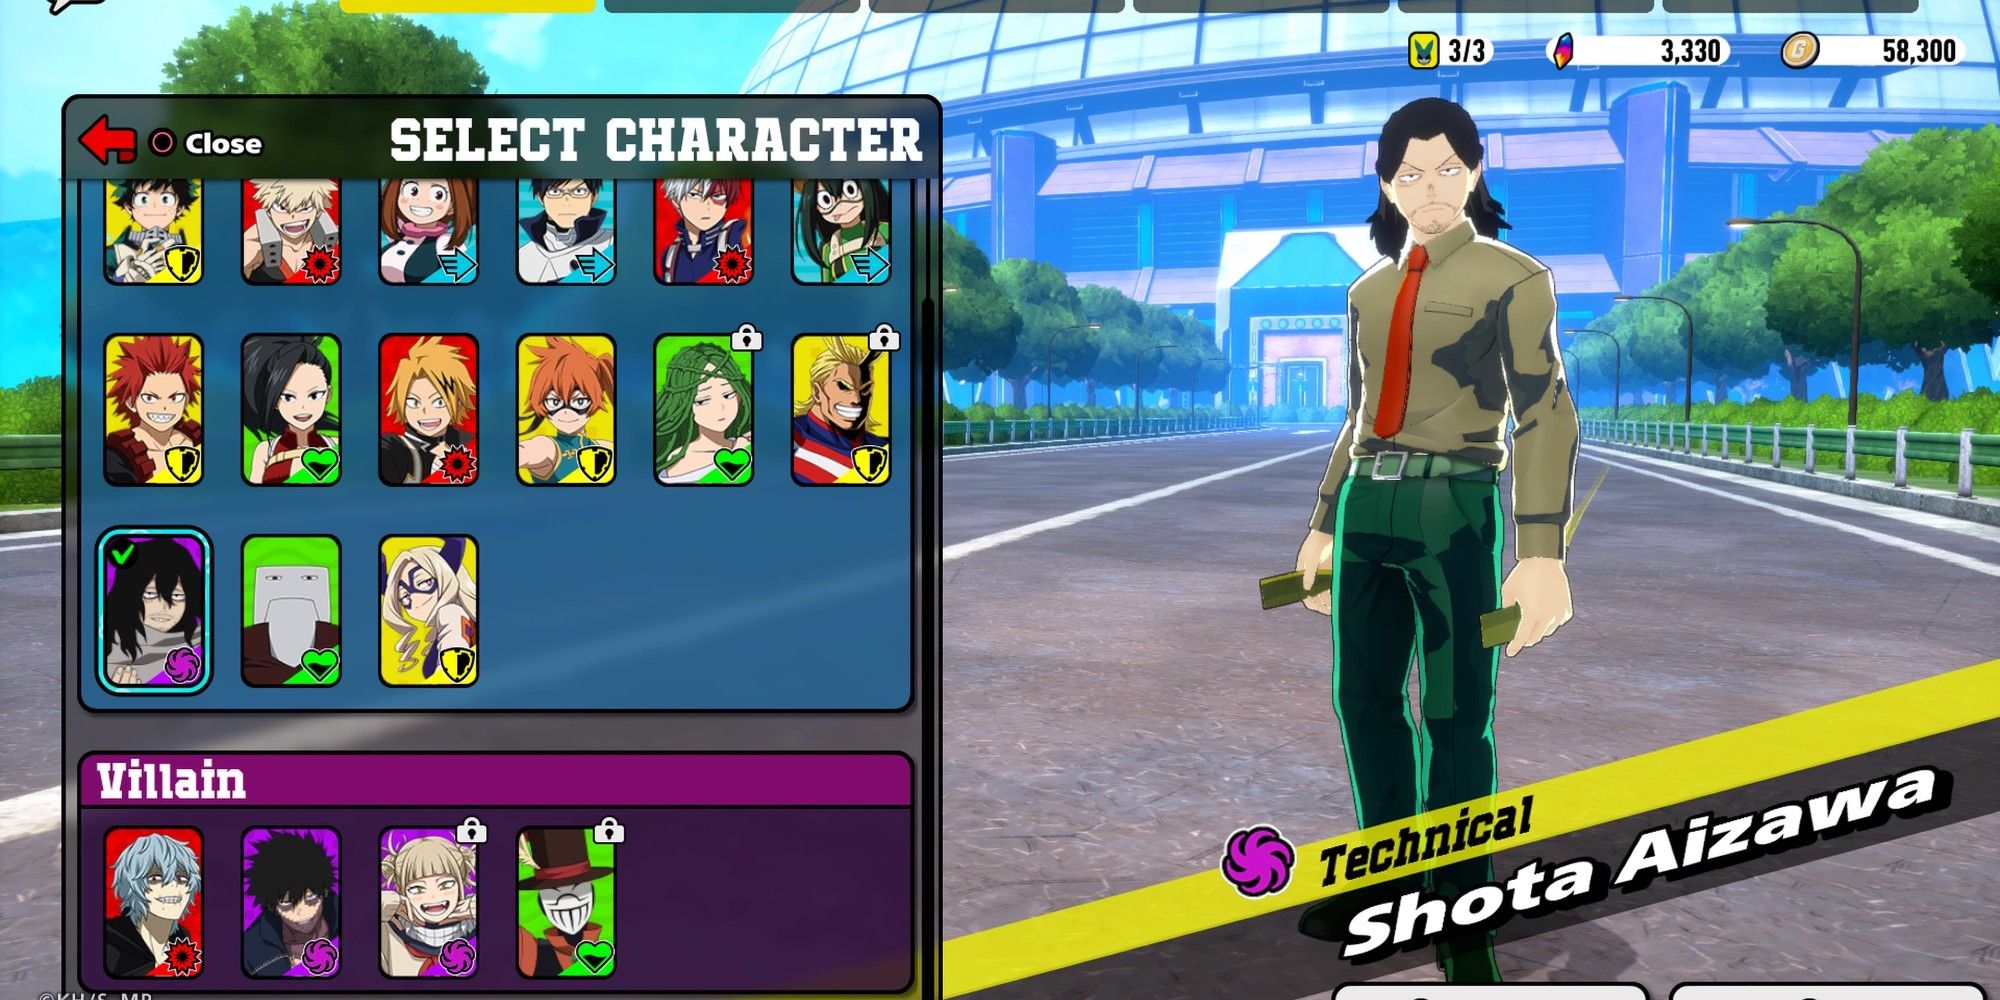 Aizawa in the character select